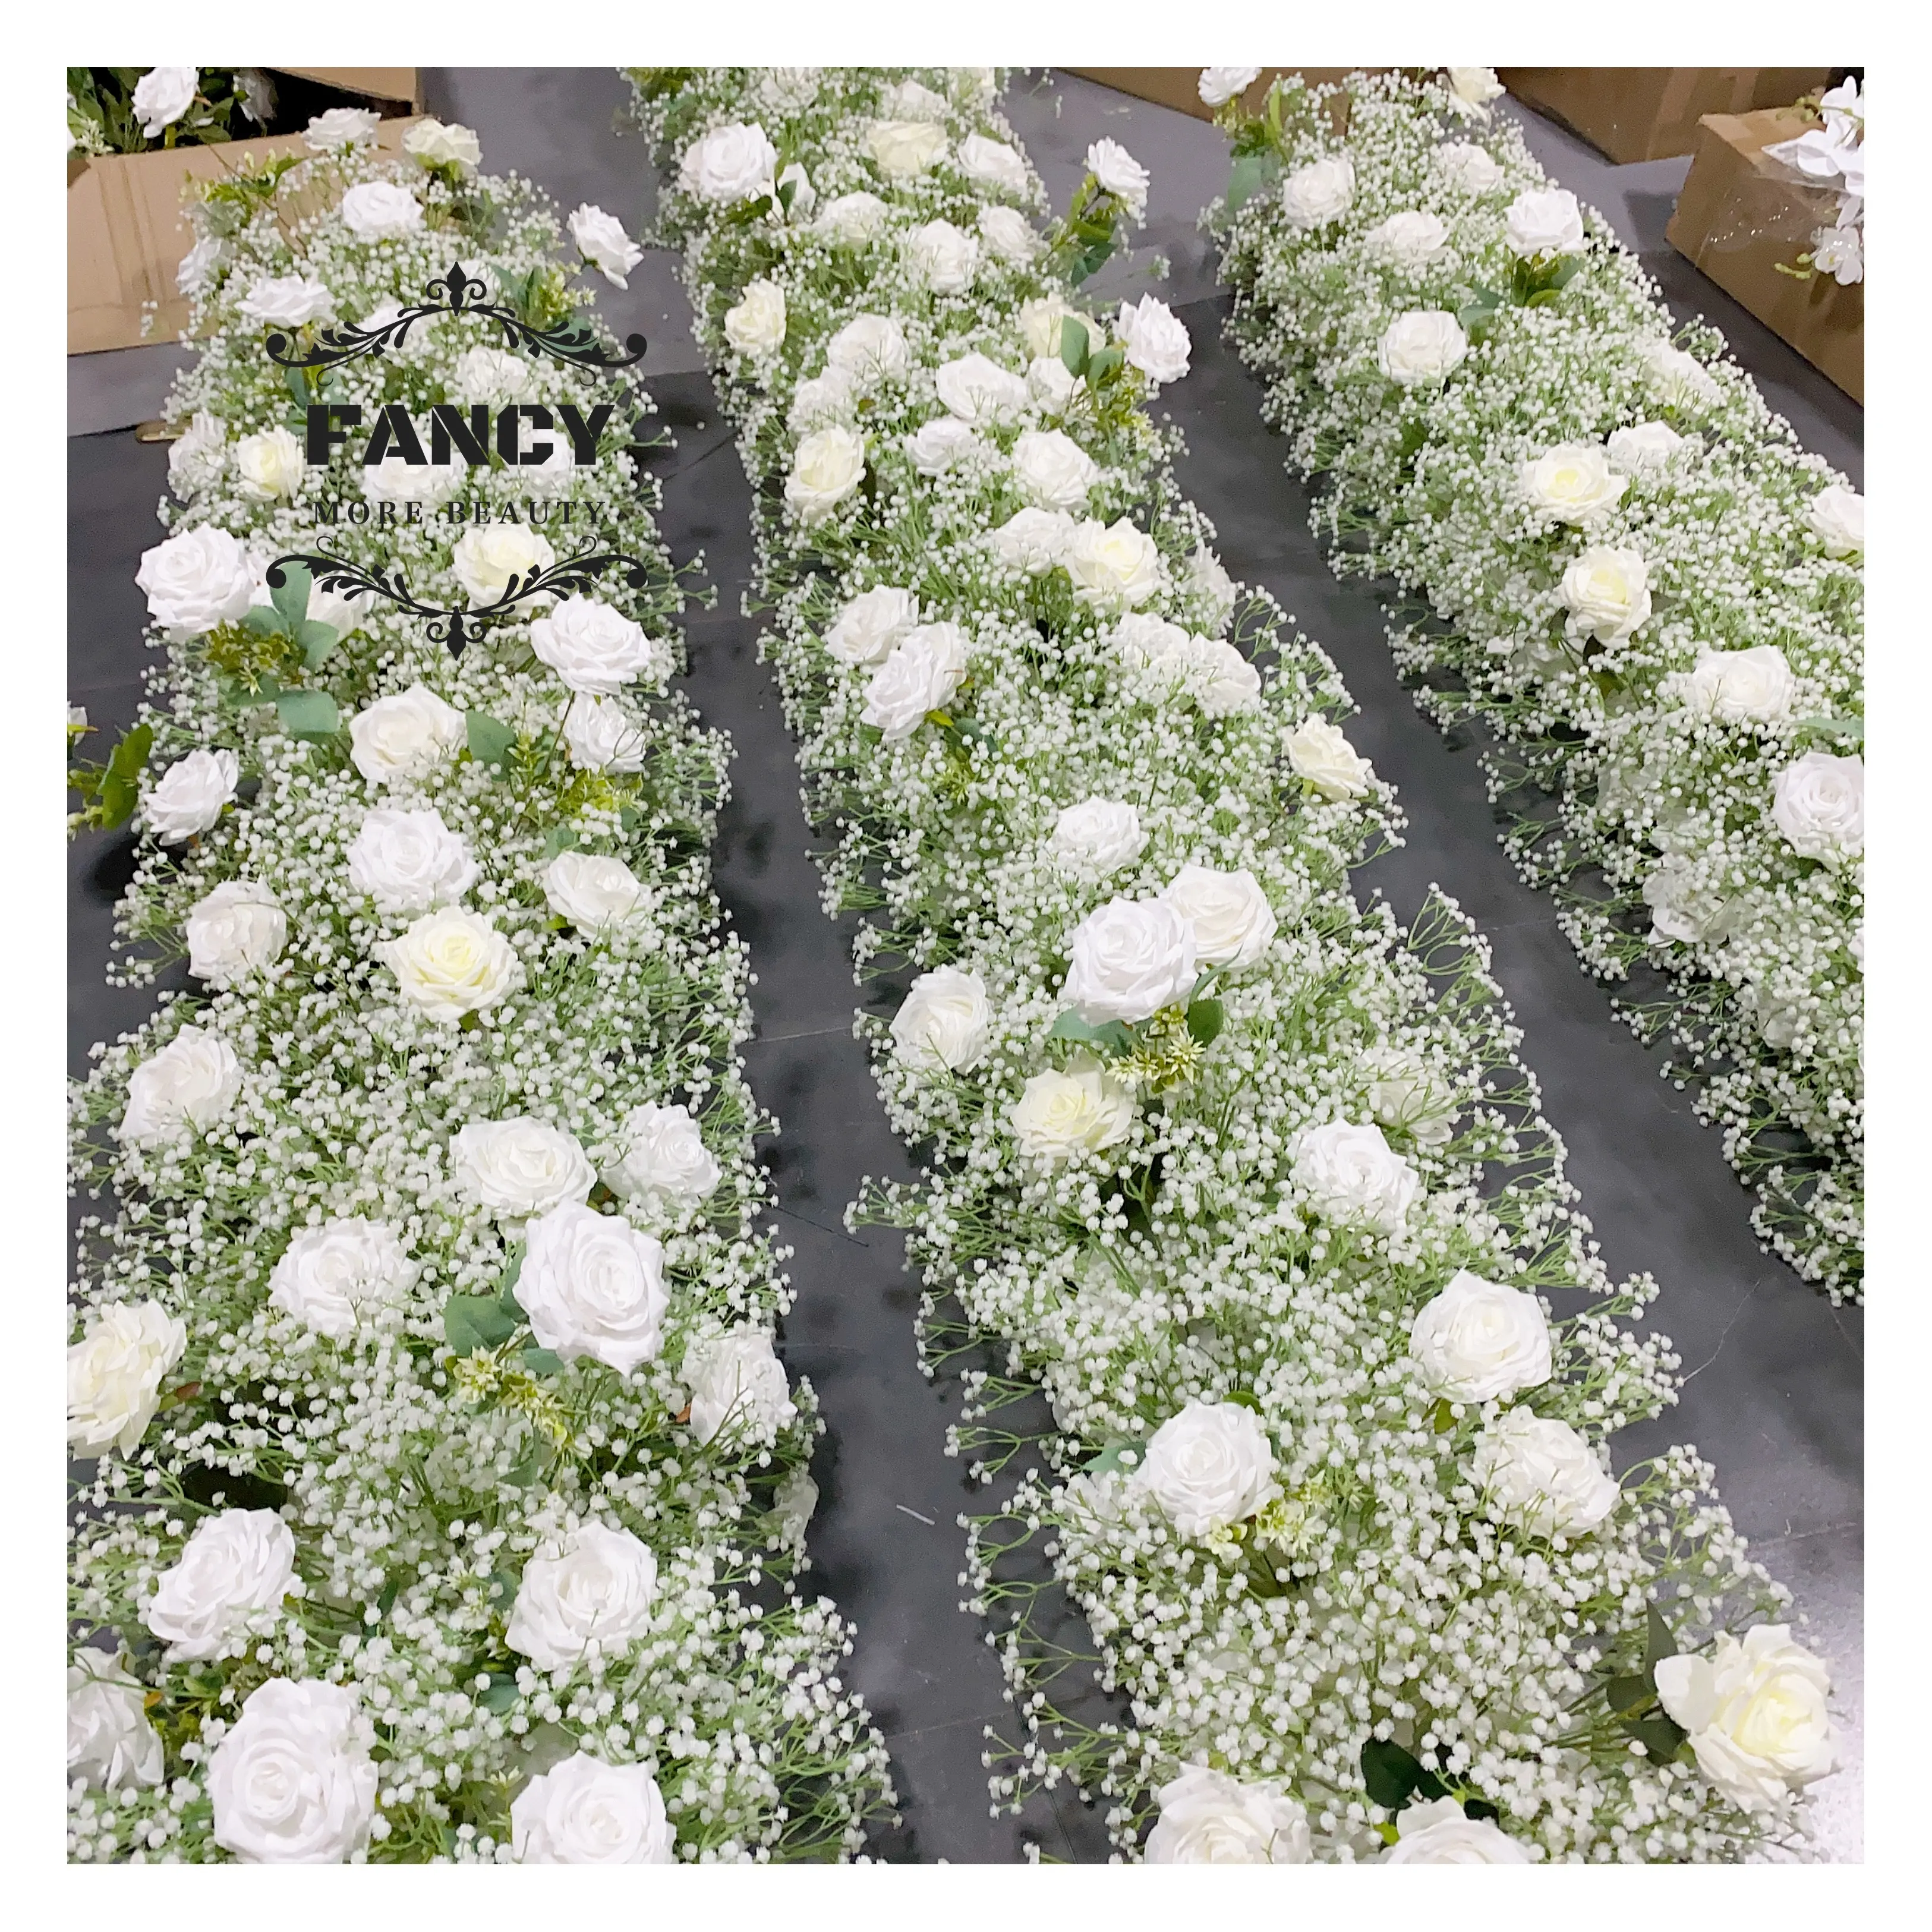 Luxo White Rose Babysbreath Casamento 5D Floral Runner Arranjo Evento Mesa Centerpieces Tecido Gypsophila Flower Garland